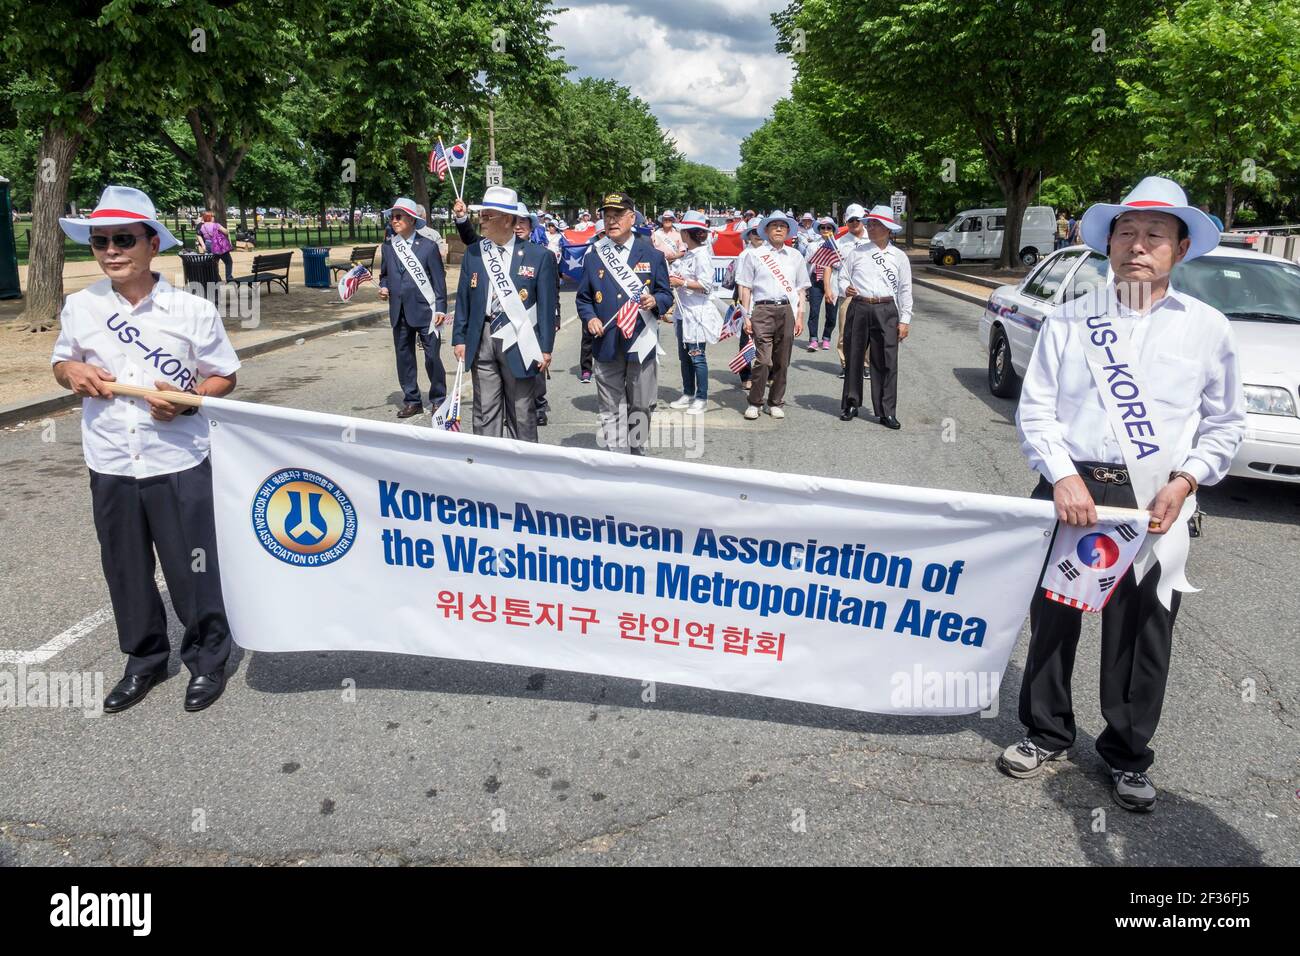 Washington DC, National Memorial Day Parade, Korean American Association banner Asian Men Holding, Banque D'Images